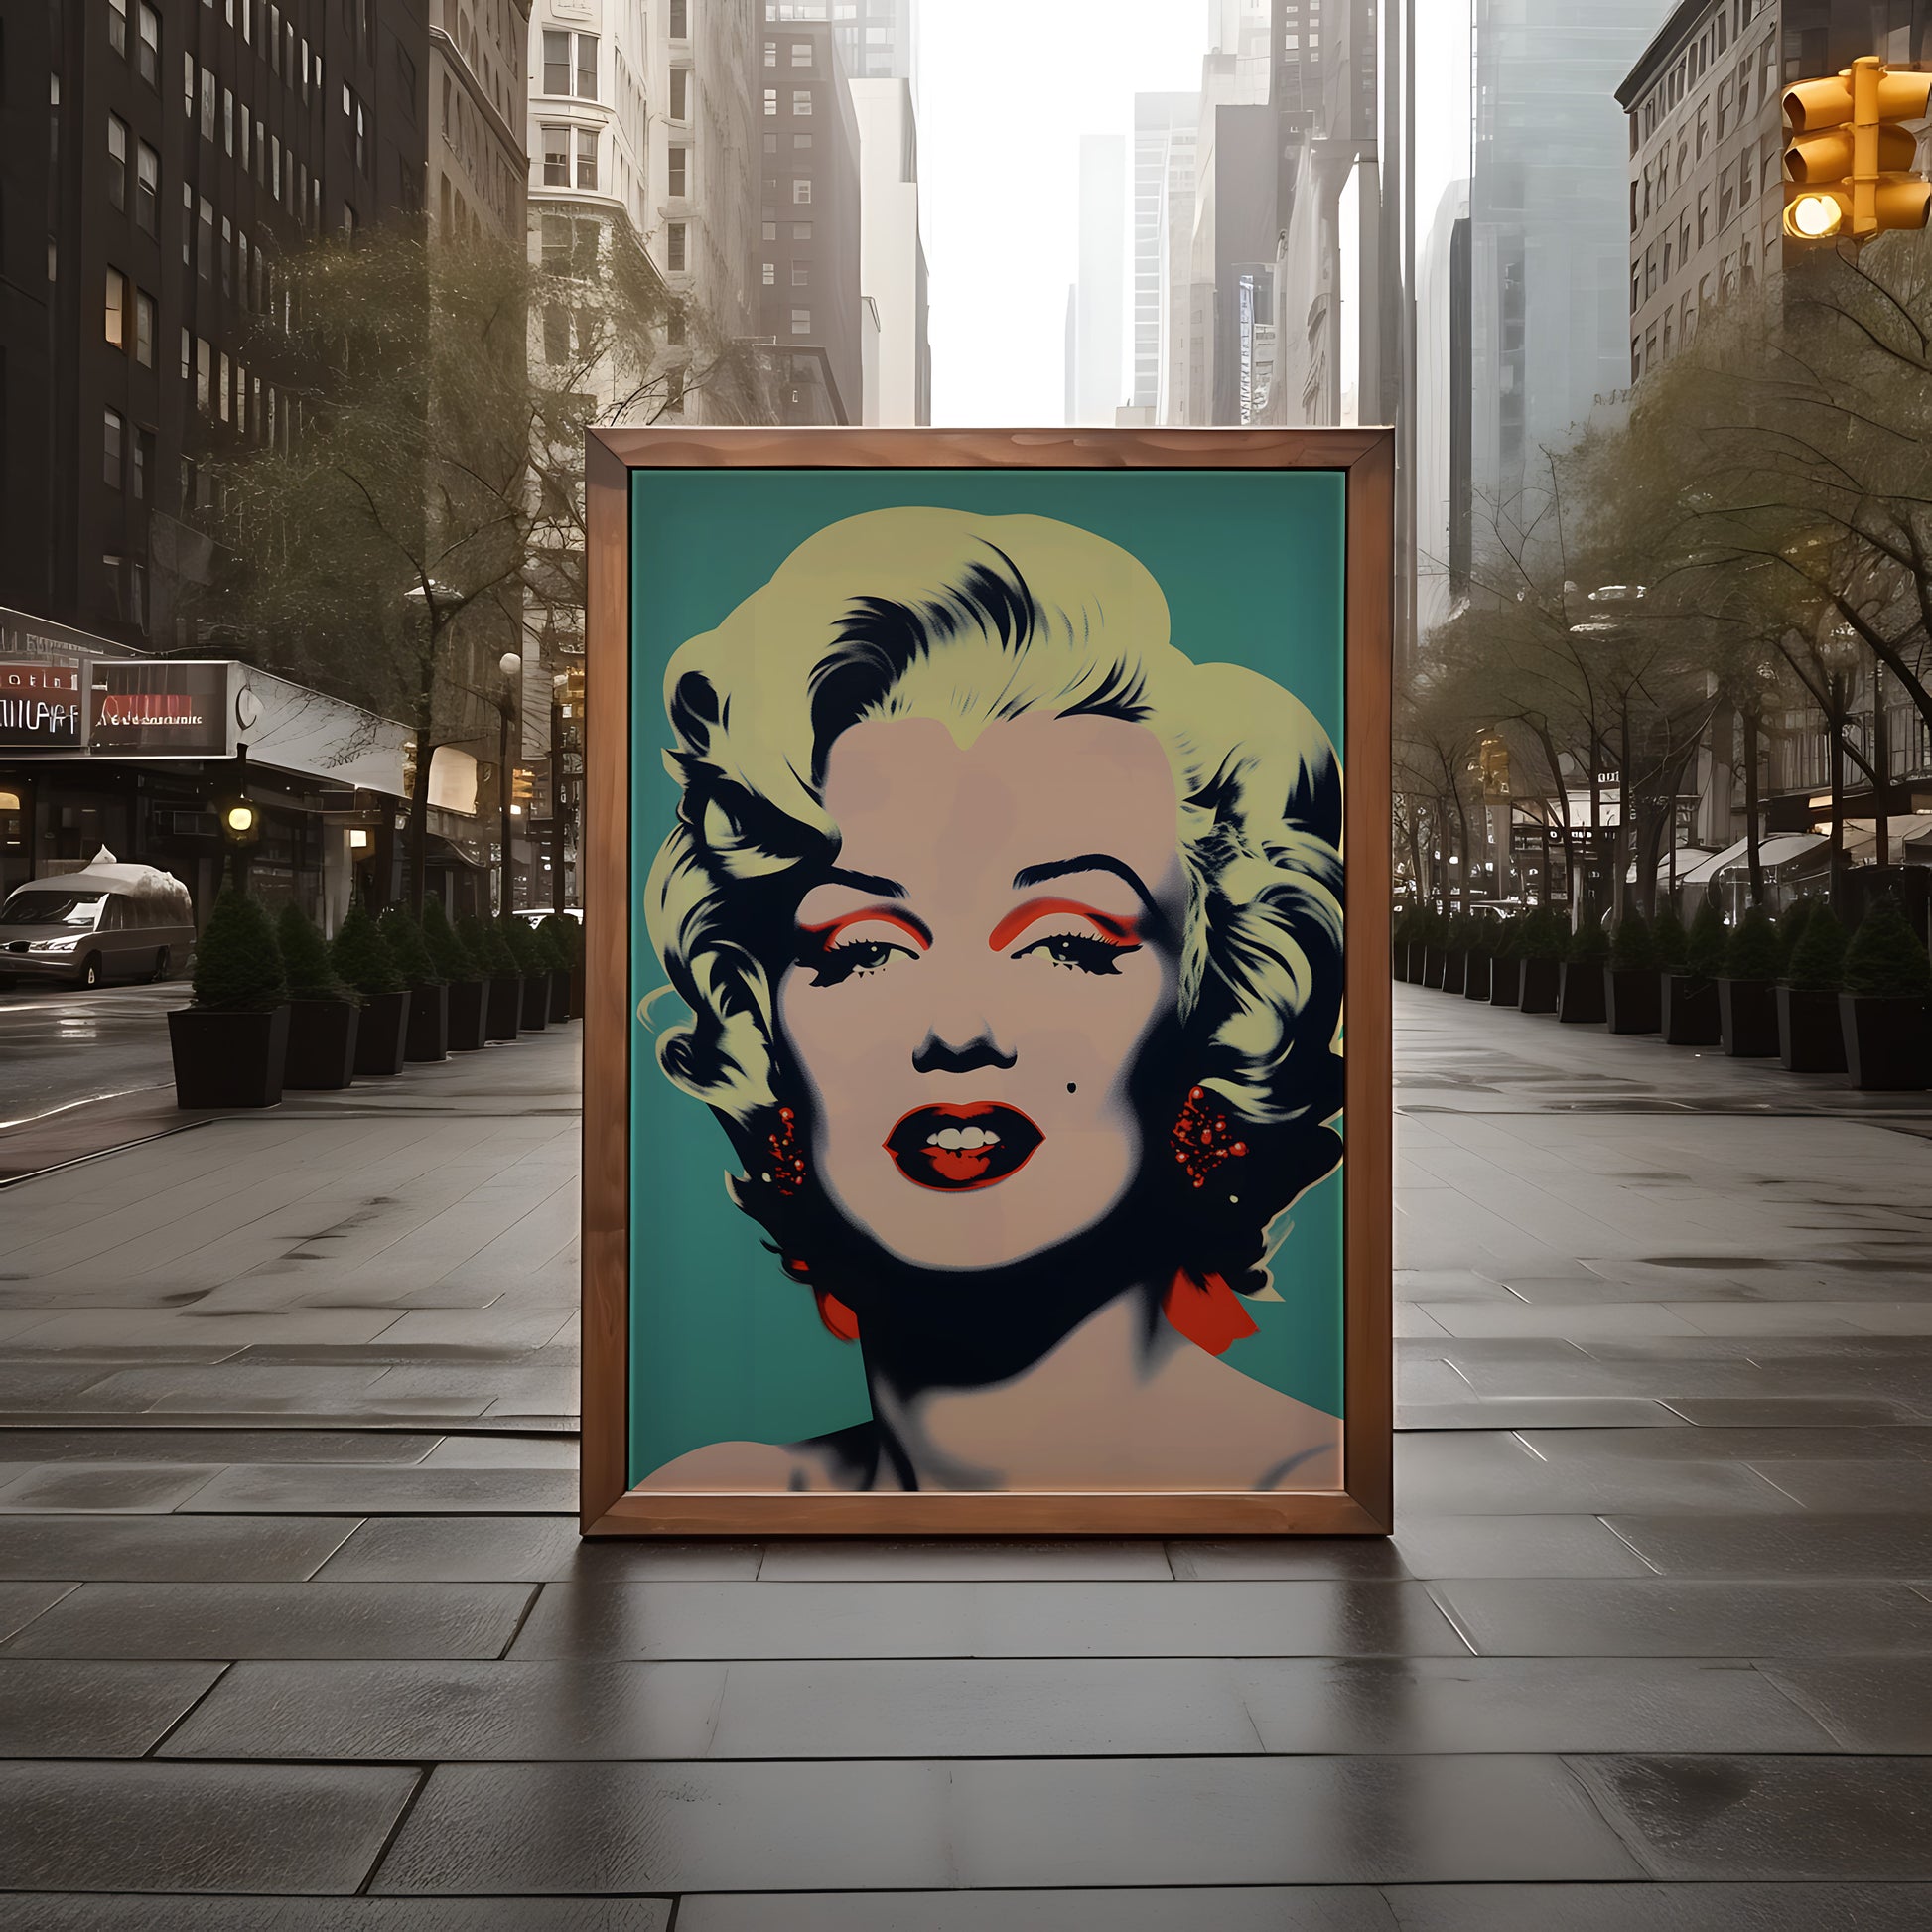 A large pop art portrait displayed on a city street.